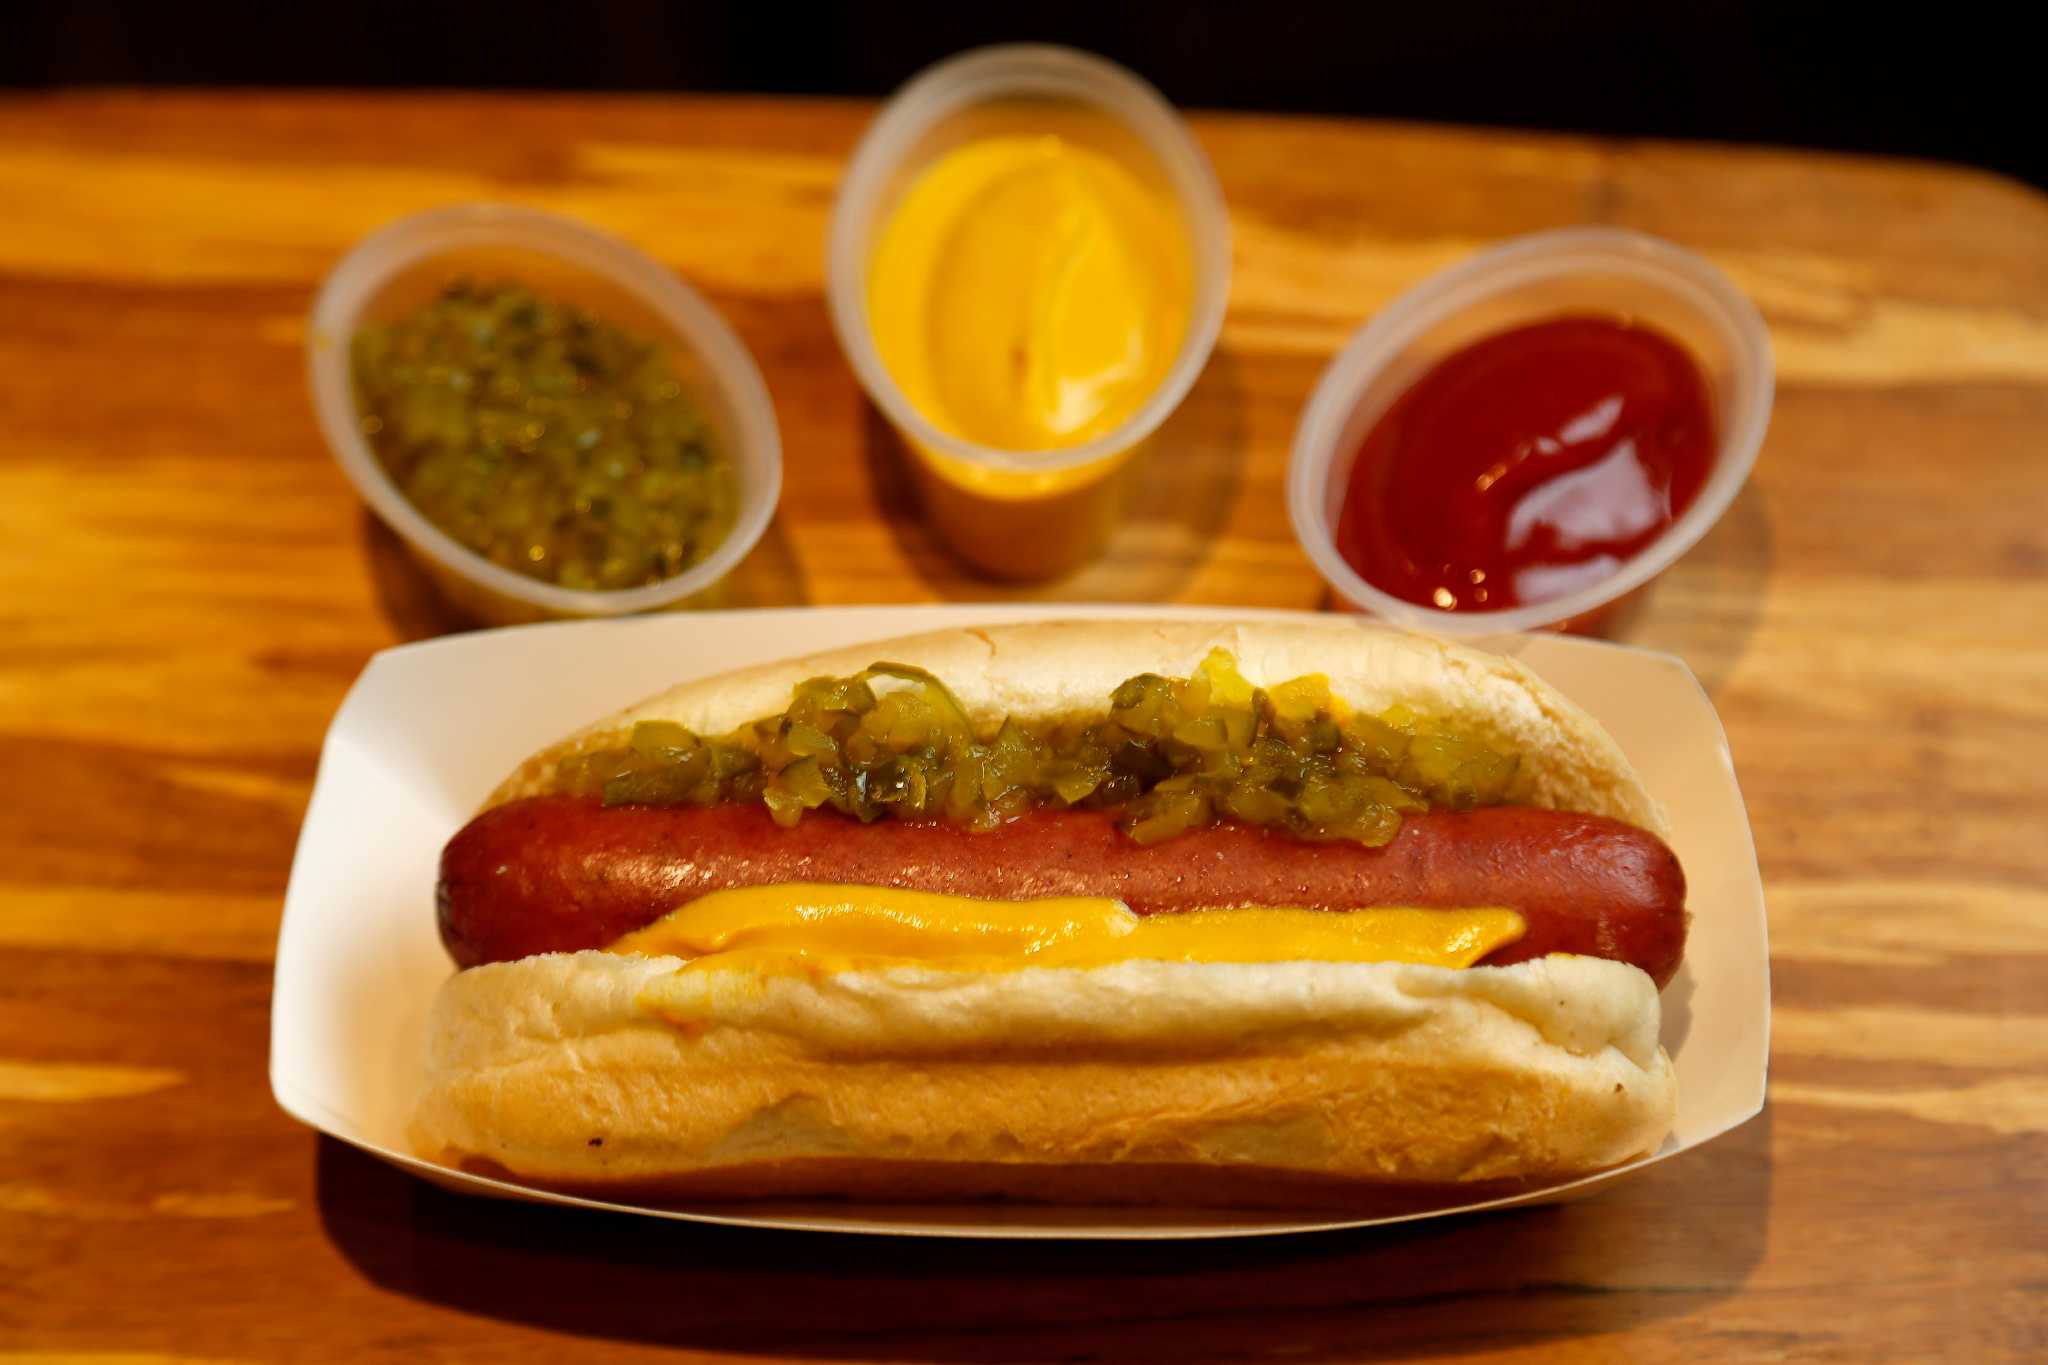 Texas Rangers baseball stadium sells a $26 hot dog